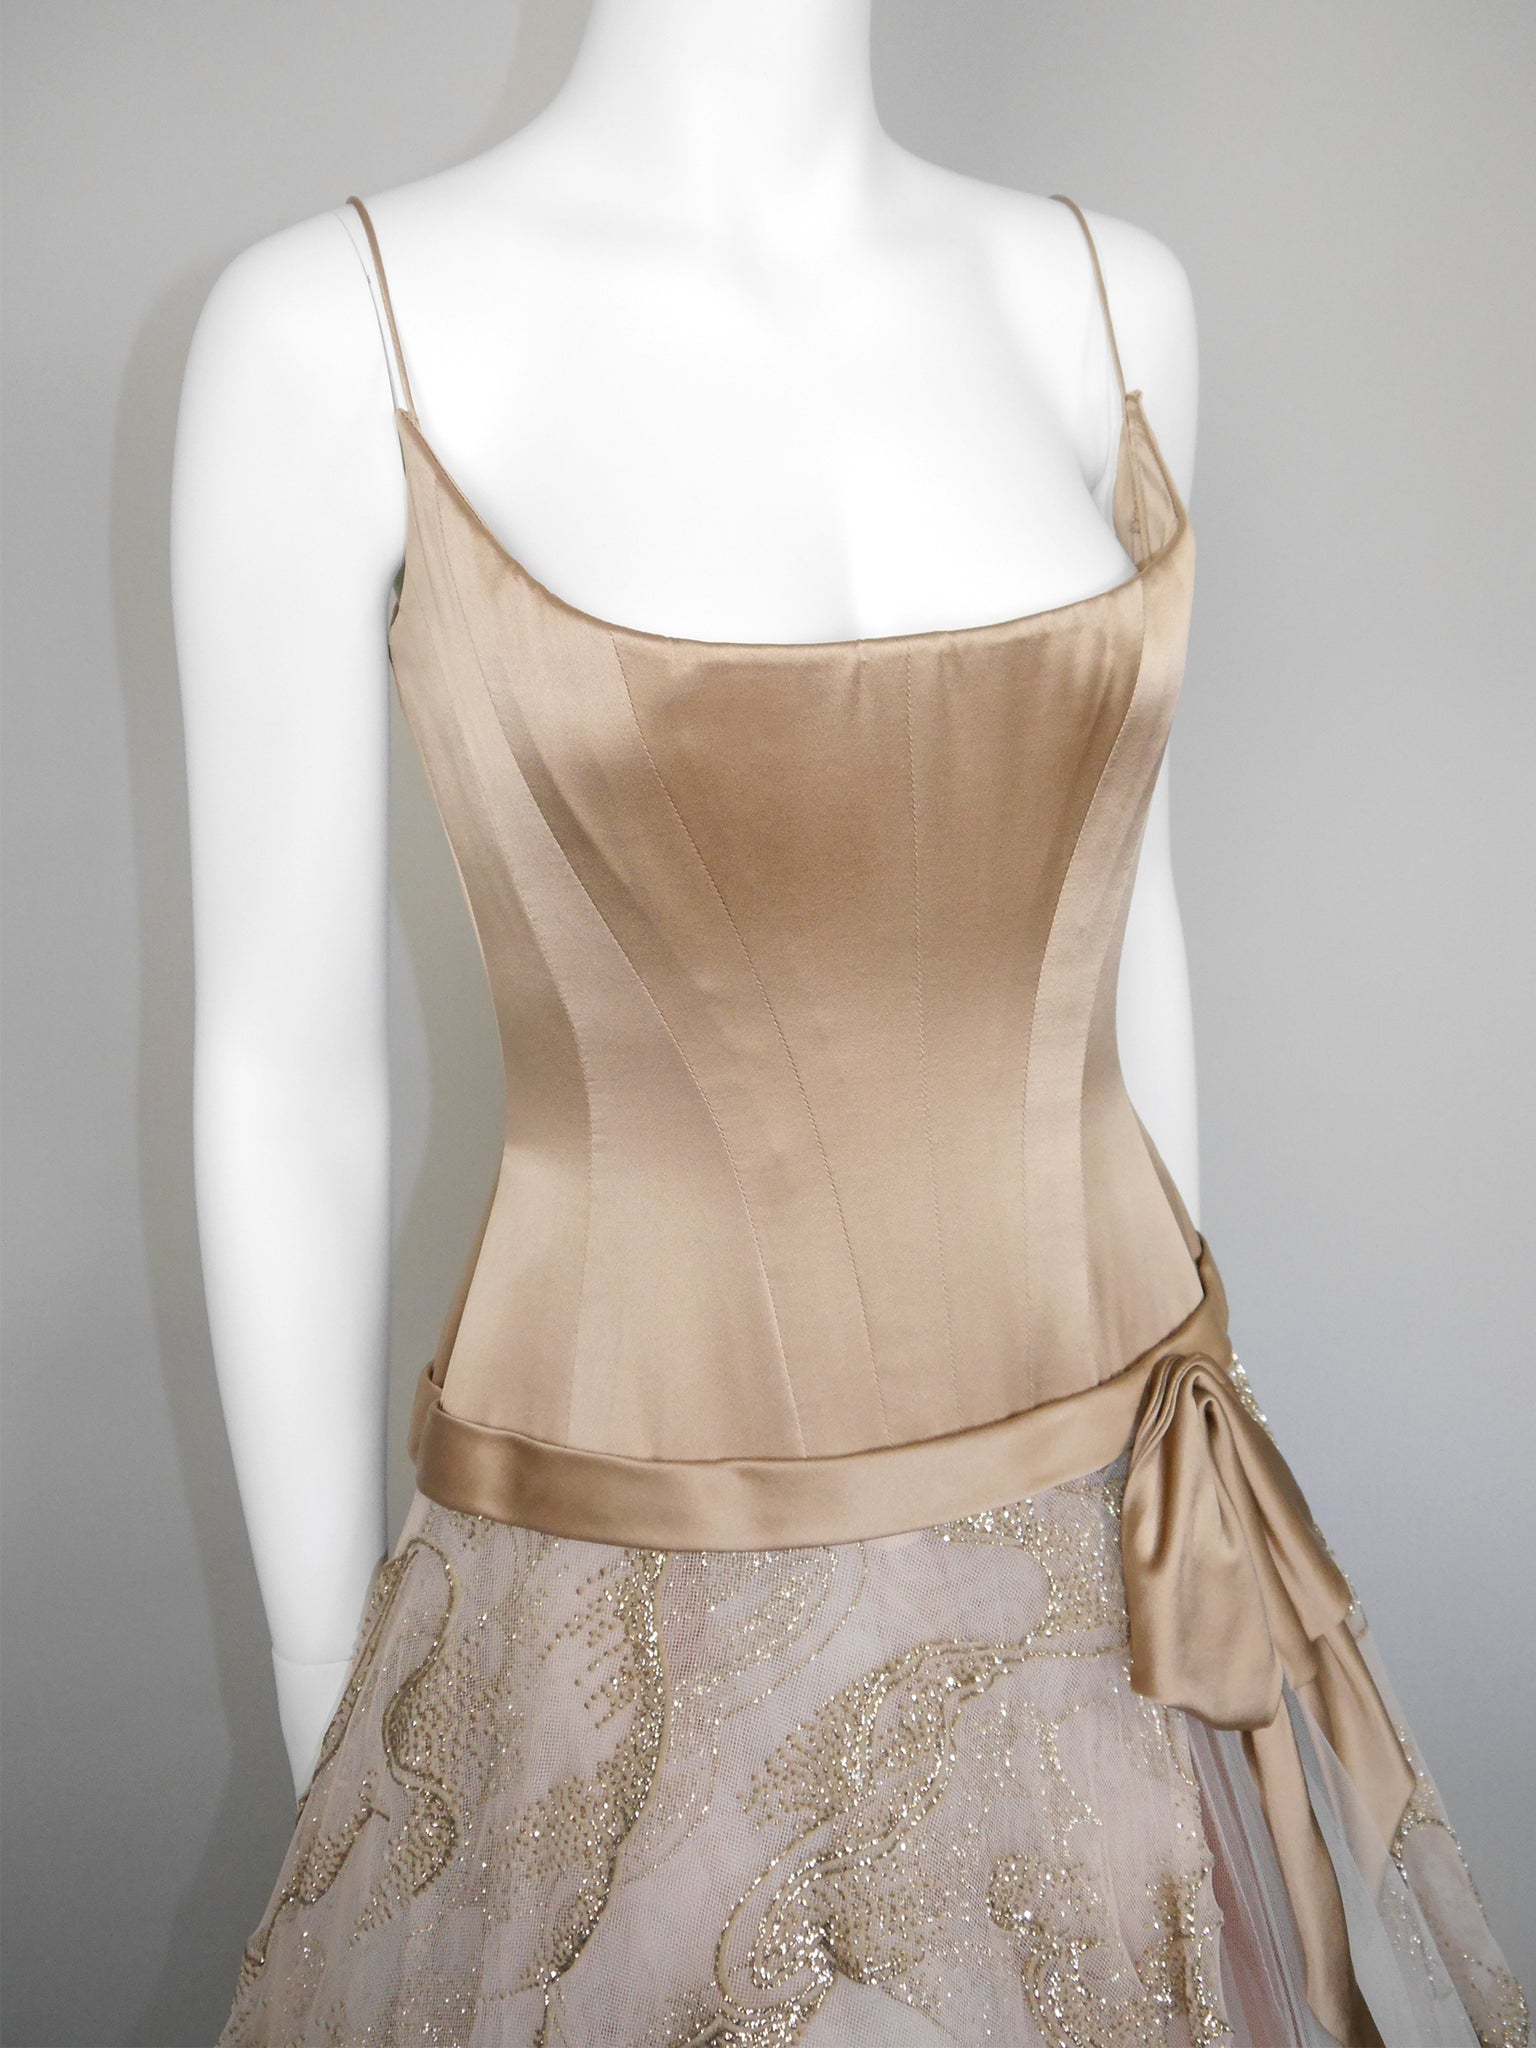 NINA RICCI 1990s Vintage Princess Ball Gown Evening Dress w/ Stole Size M